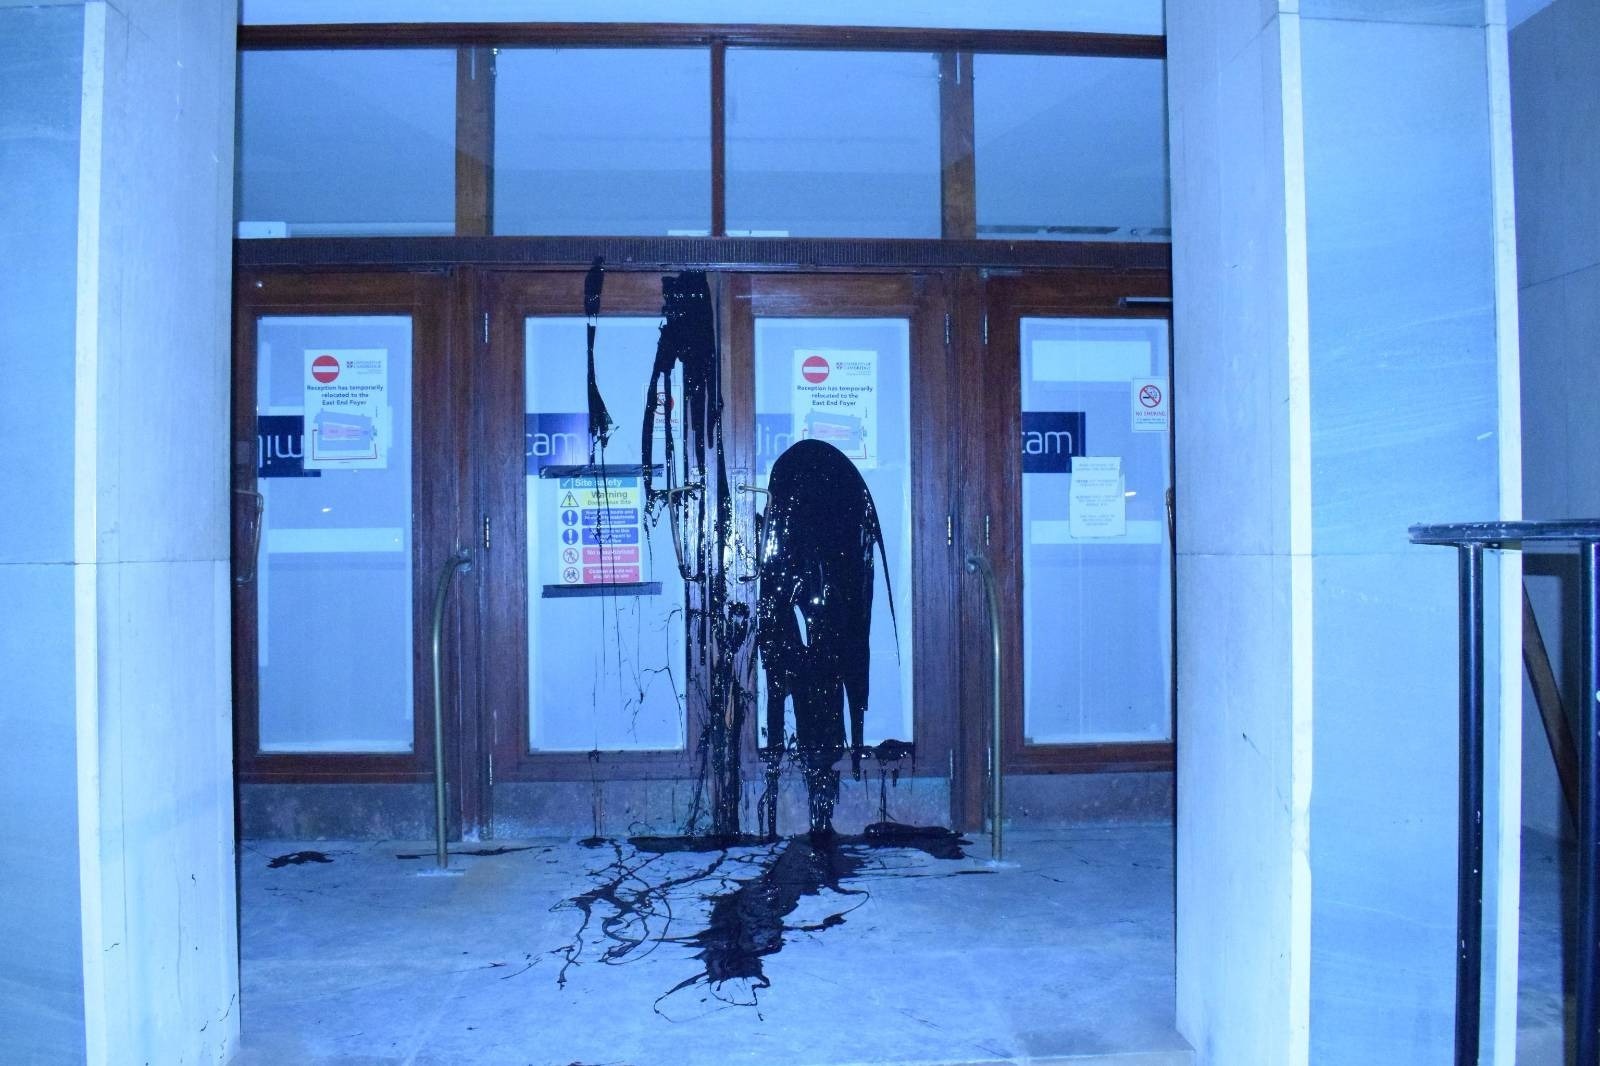 02/08/2022: Black paint thrown over University of Cambridge Chemistry Department